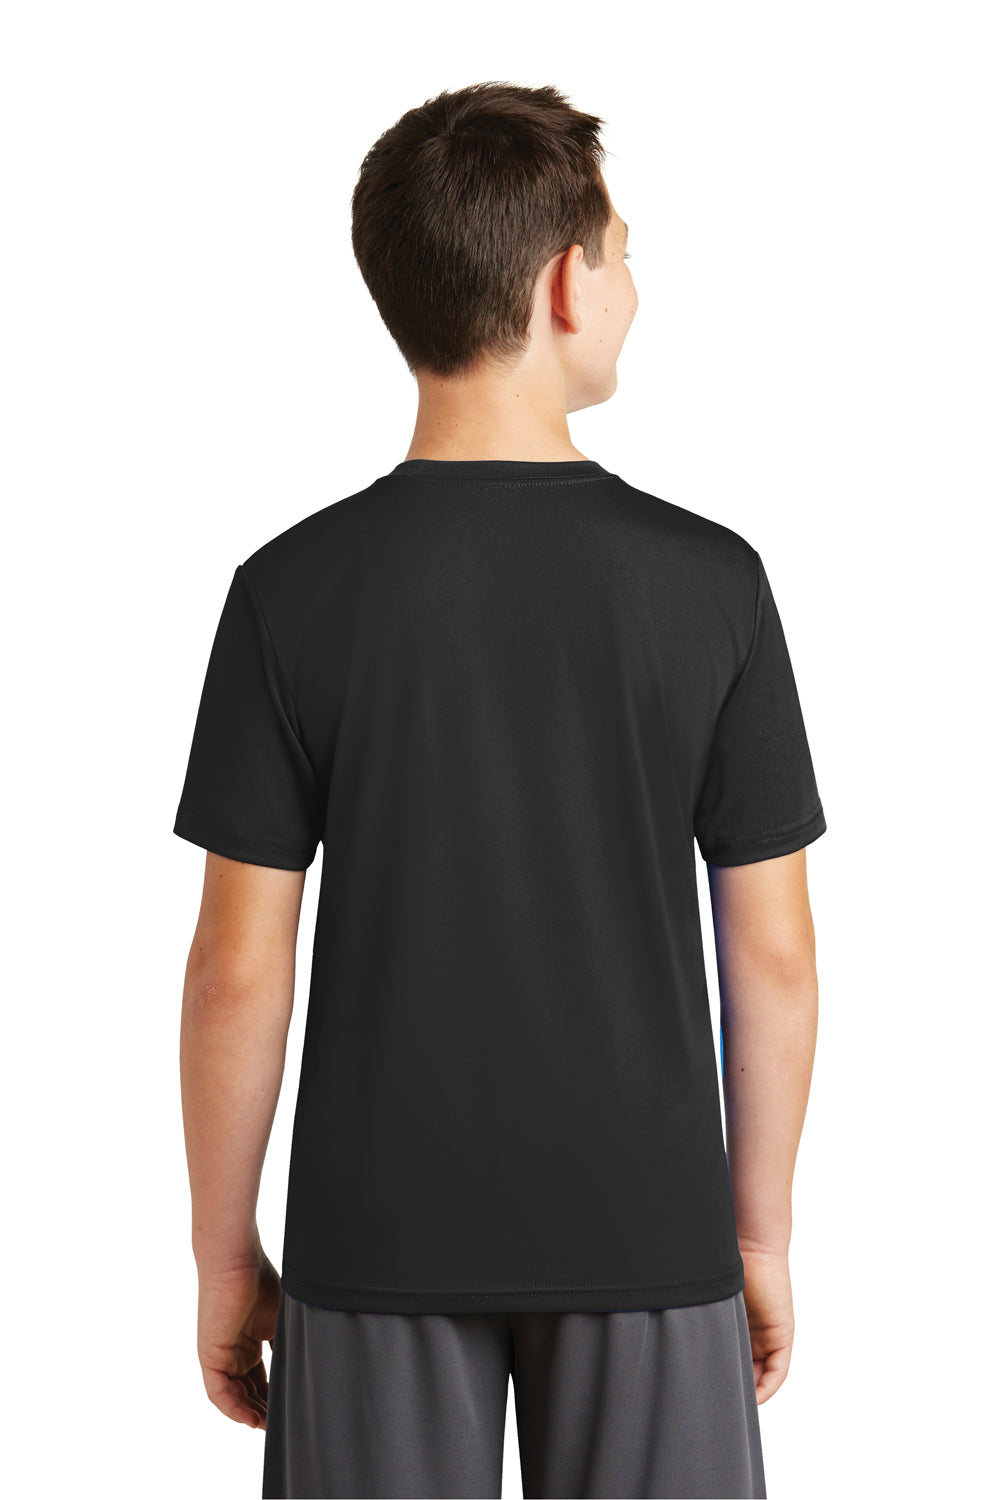 Sport-Tek YST320 Youth Tough Moisture Wicking Short Sleeve Crewneck T-Shirt Black Back